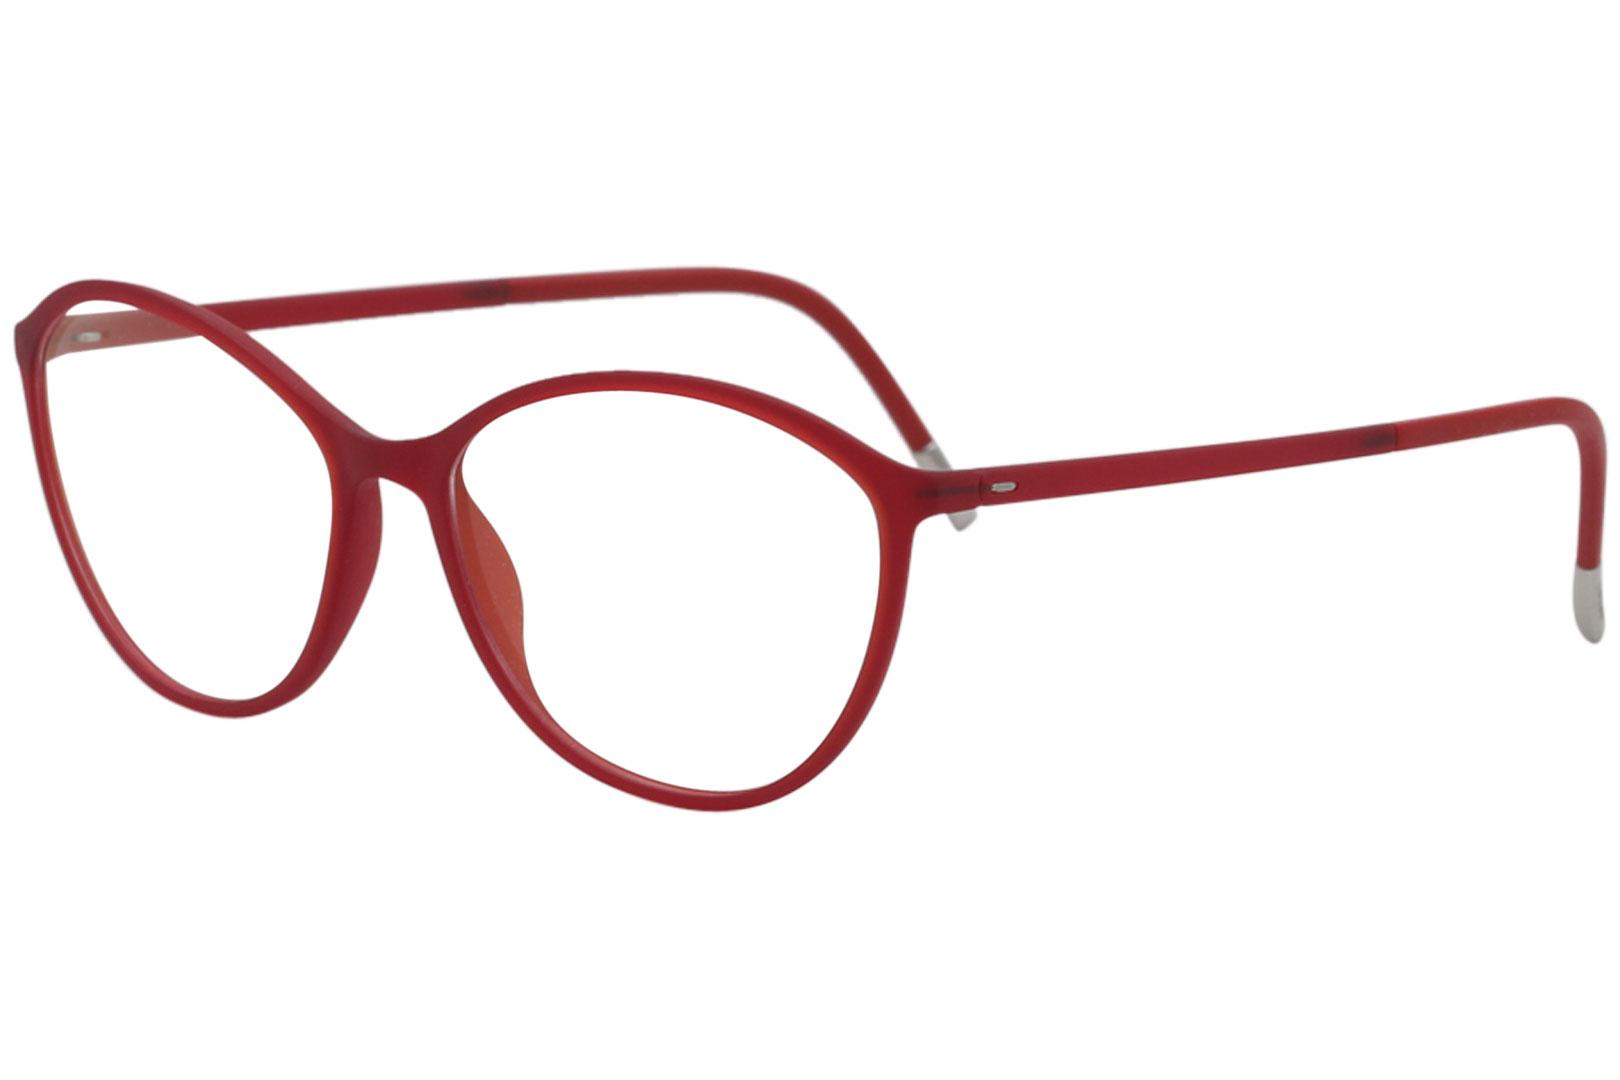 Silhouette Eyeglasses SPX Illusion 1584 3110 Cherry Red Optical Frame 54mm - Cherry Red   3110 - Lens 54 Bridge 15 Temple 135mm